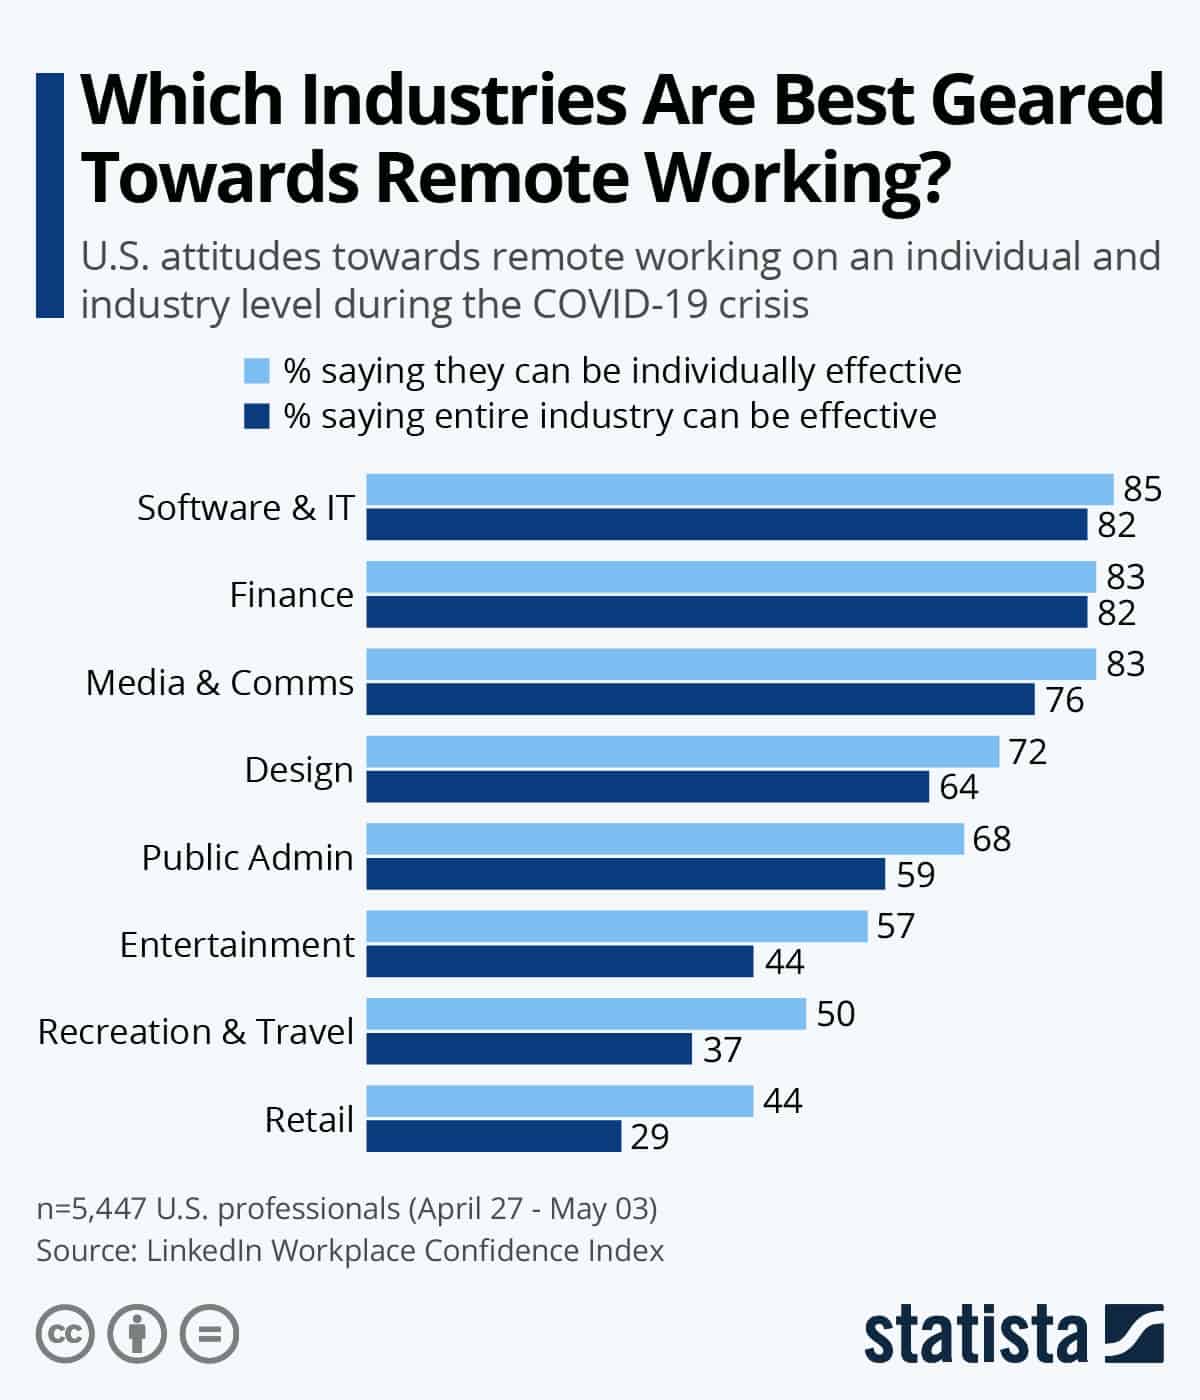 Industries geared best towards remote working